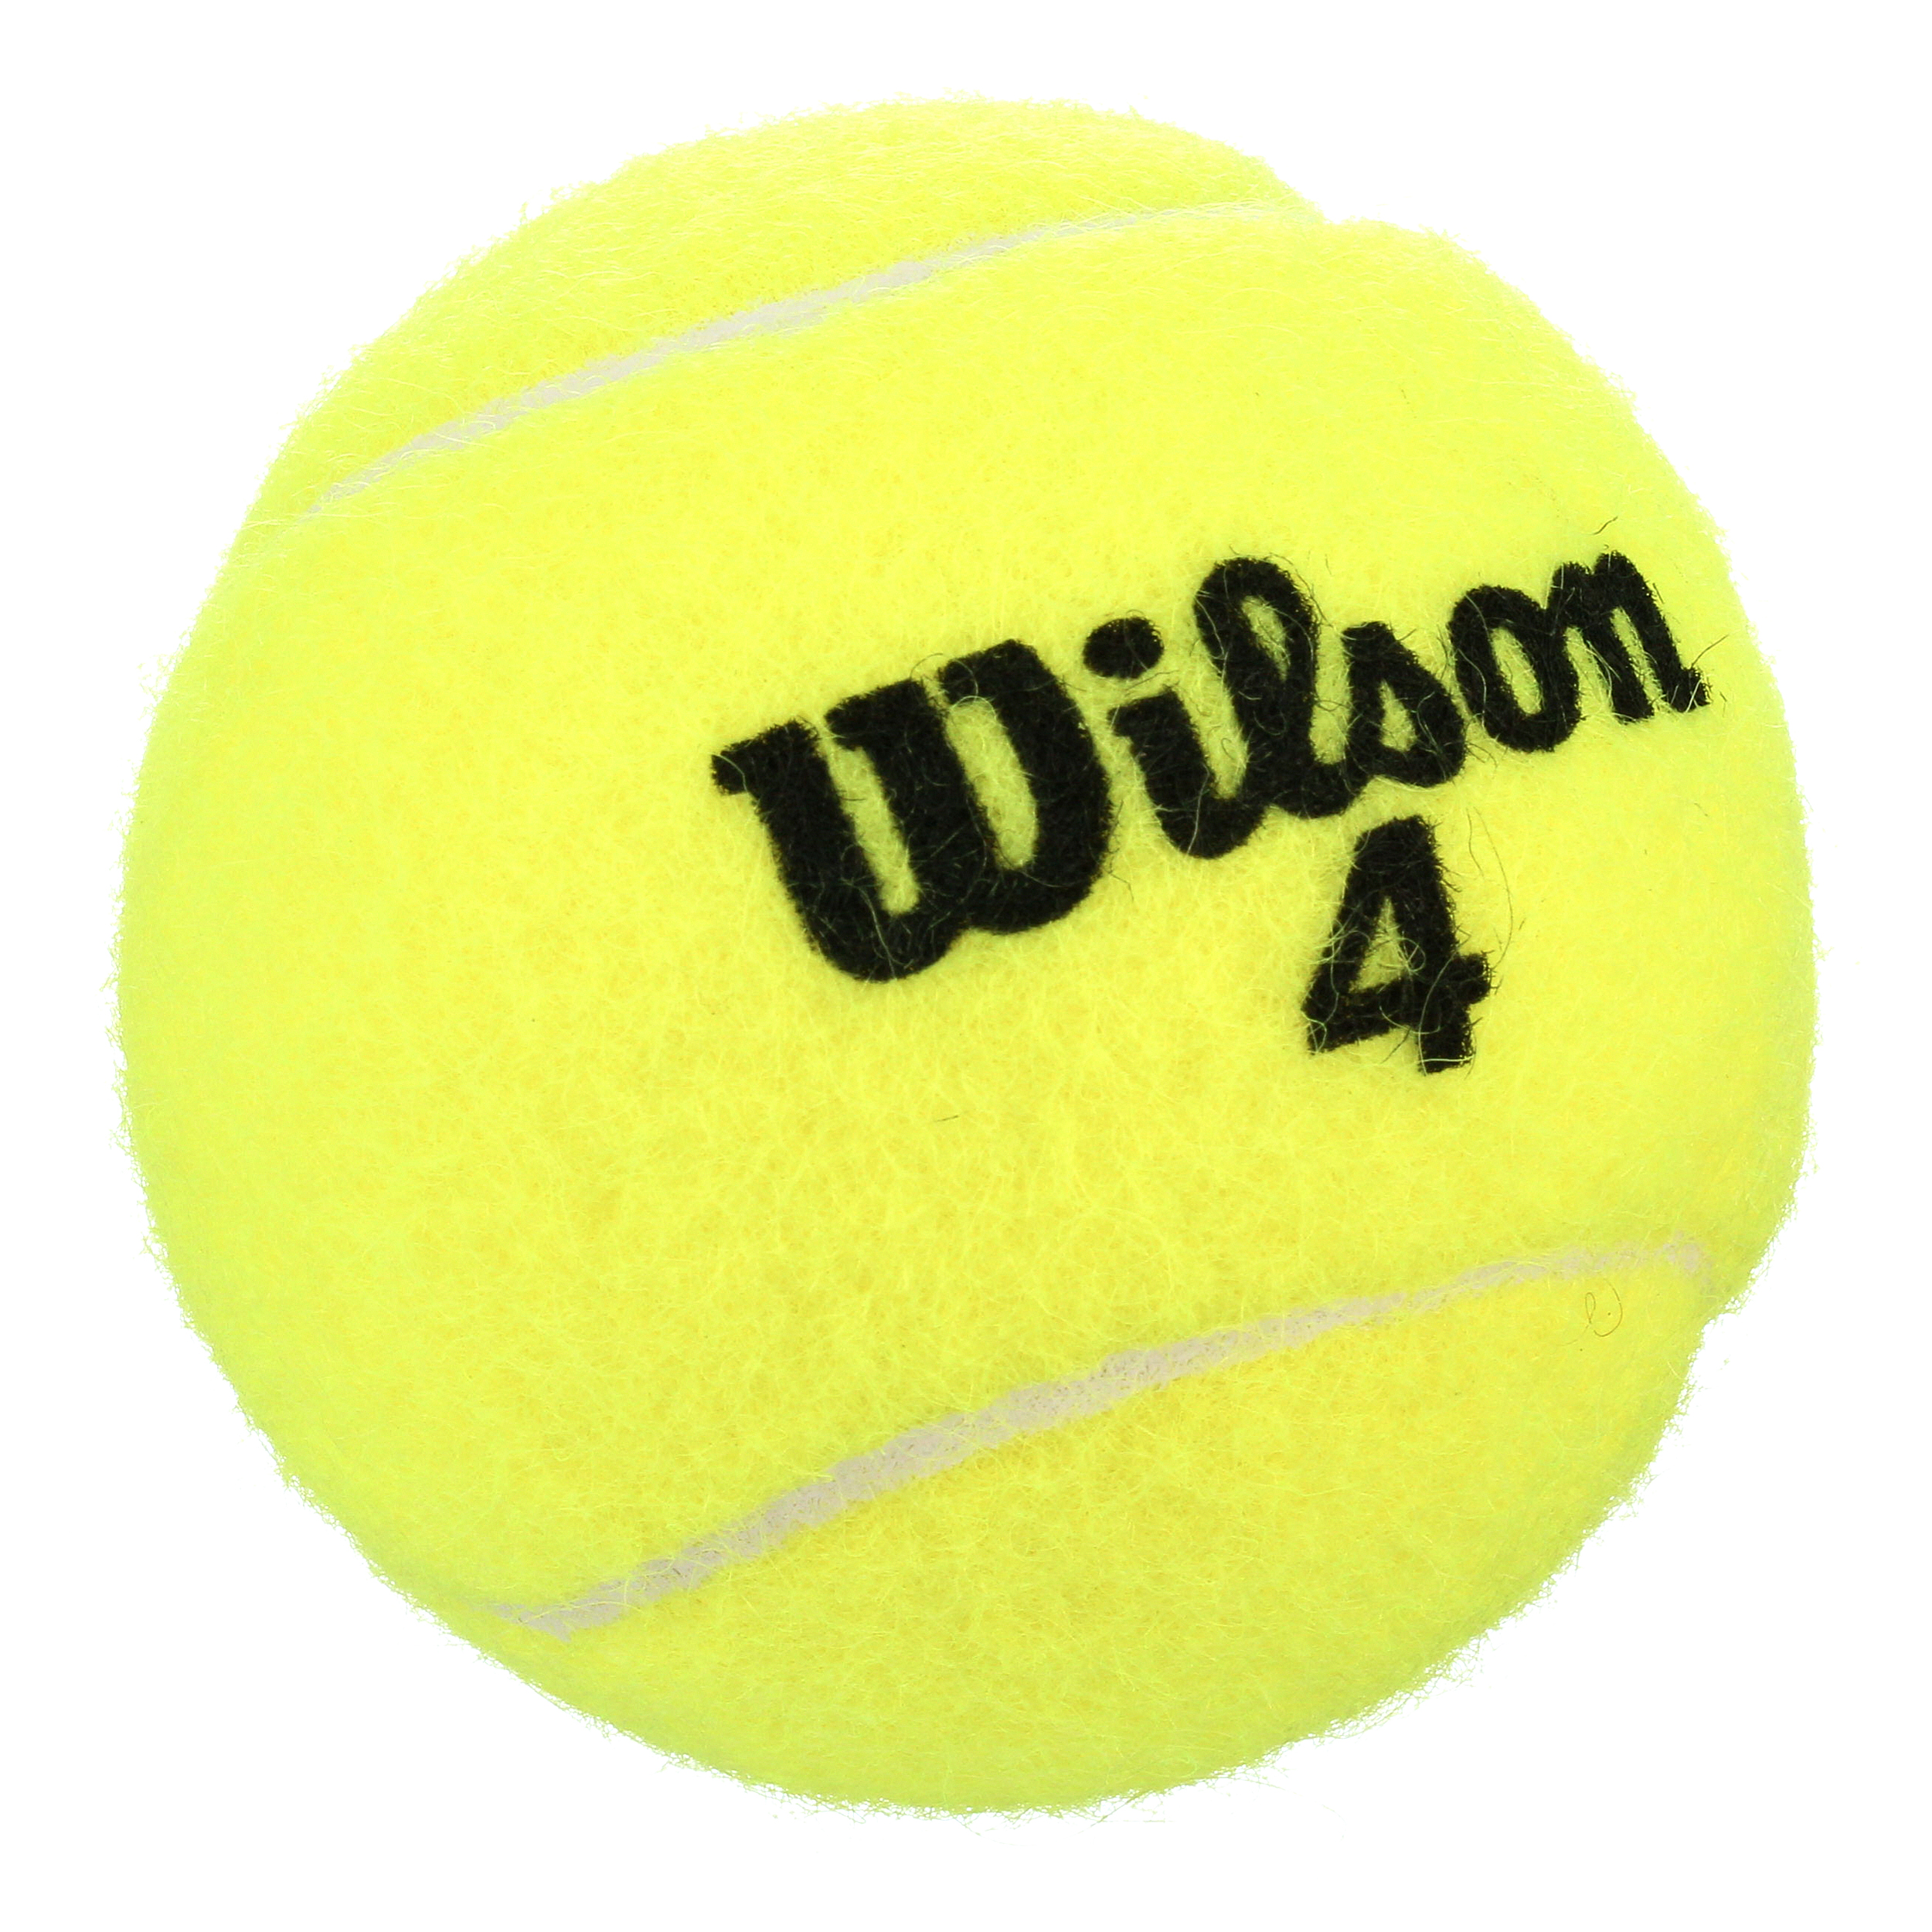 Wilson Championship Extra-Duty Tennis Balls (1 can, 3 balls) - image 4 of 10